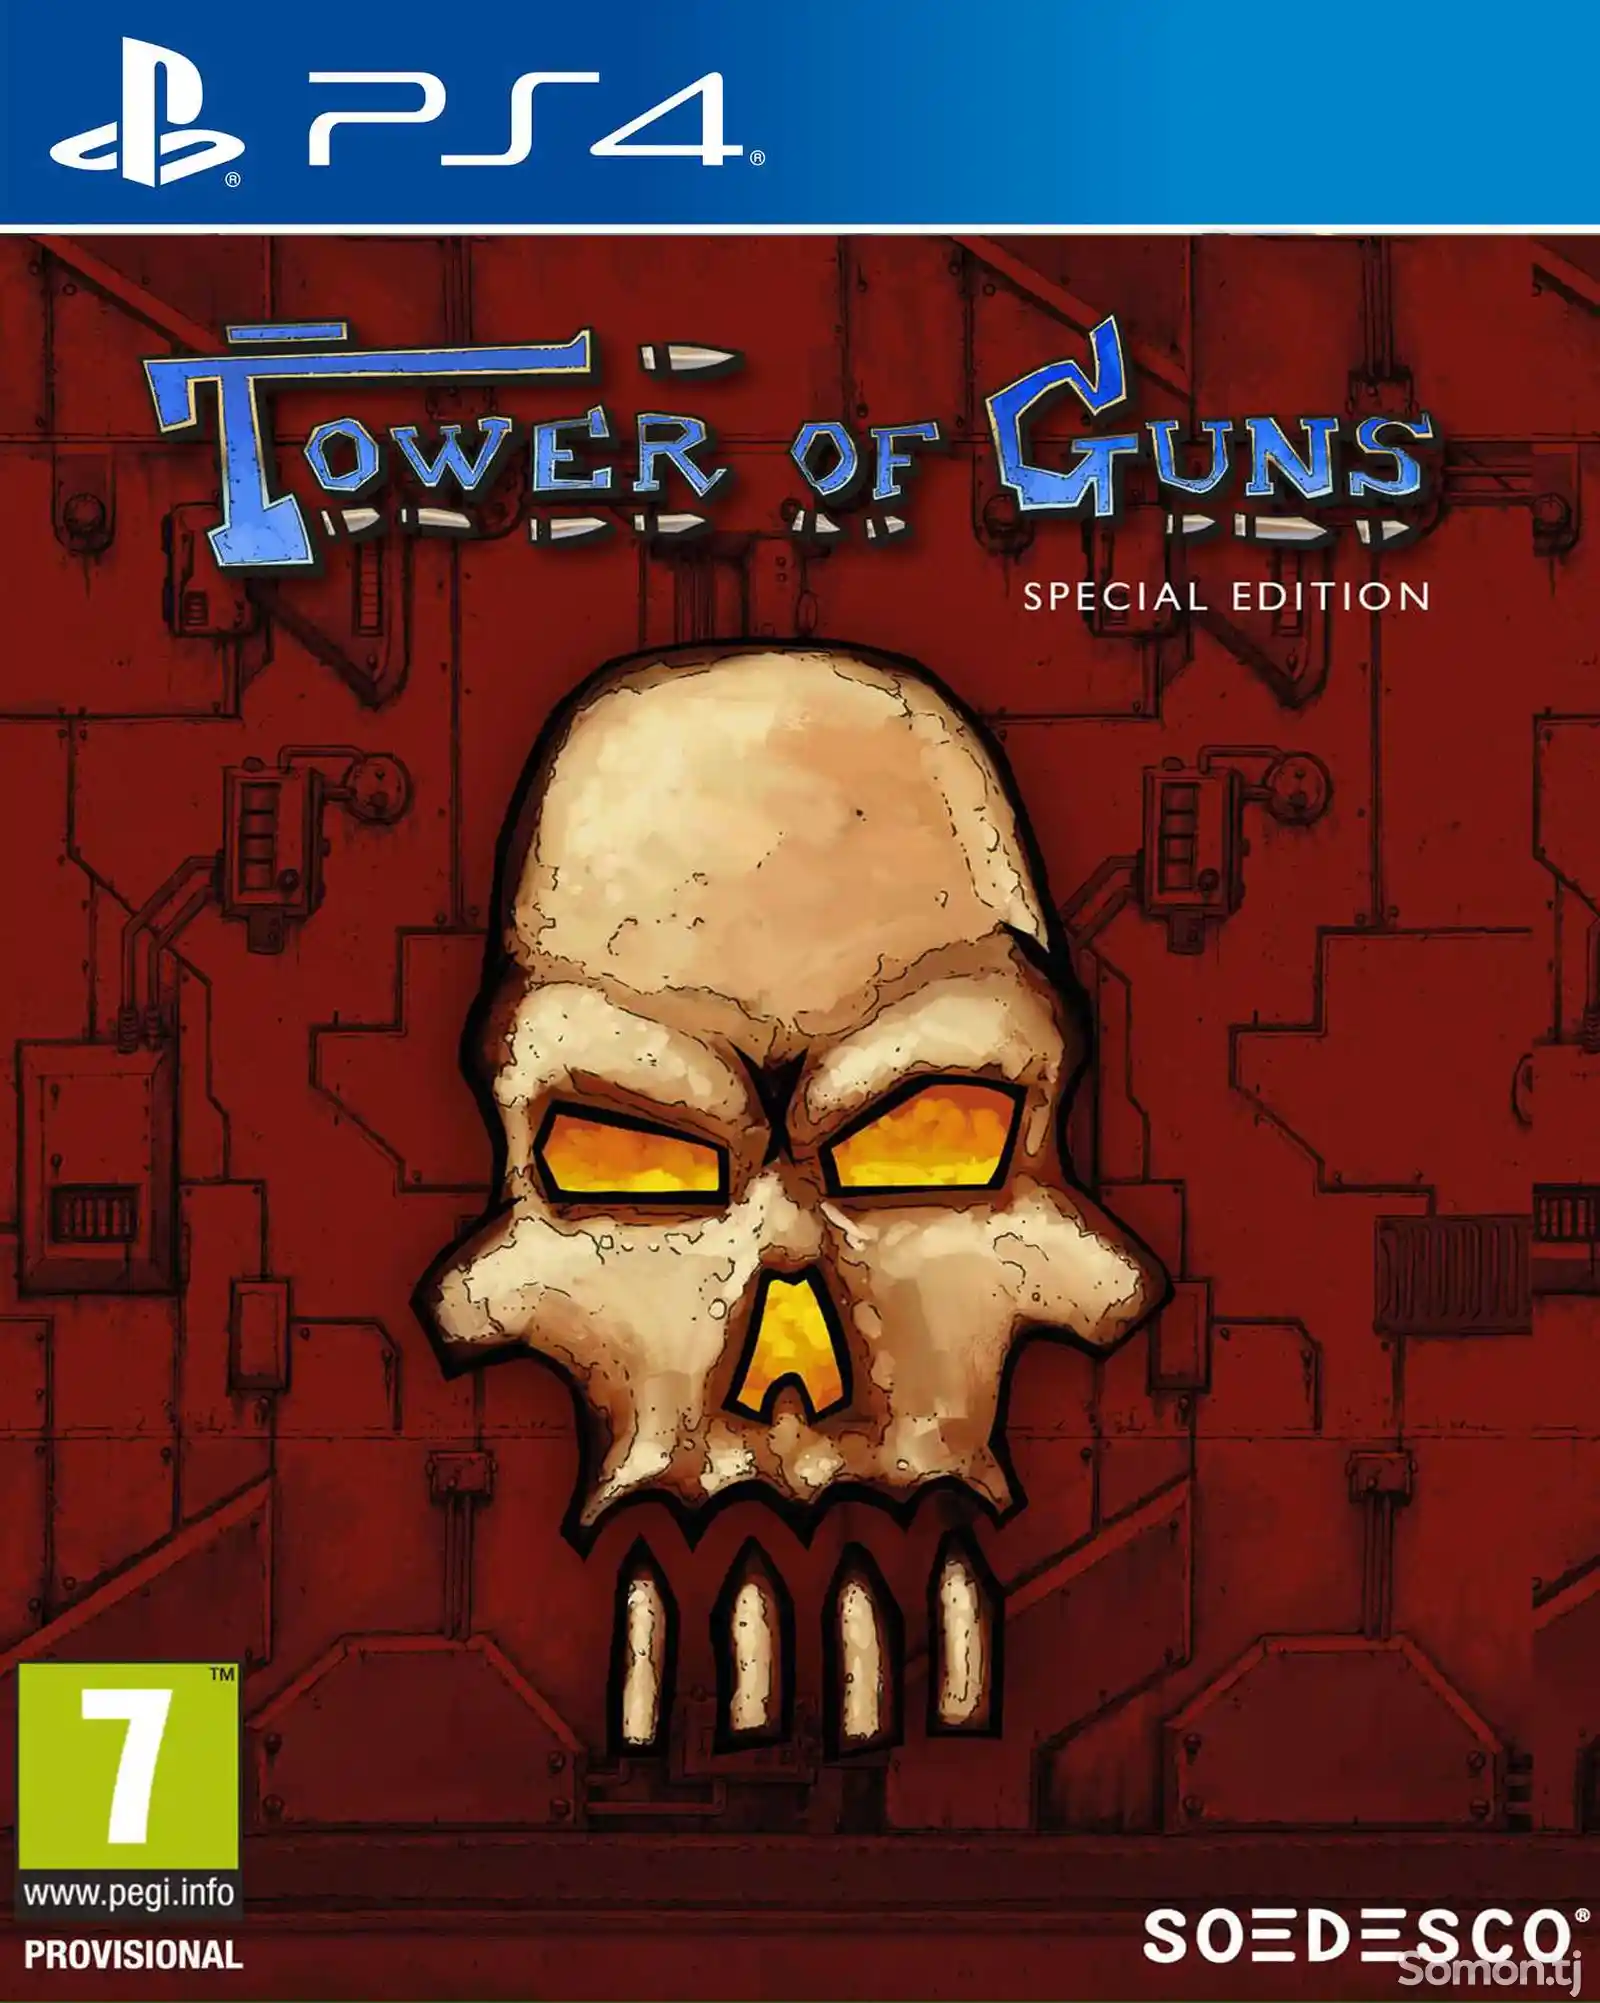 Игра Tower of guns для PS-4 / 5.05 / 6.72 / 7.02 / 7.55 / 9.00 /-1